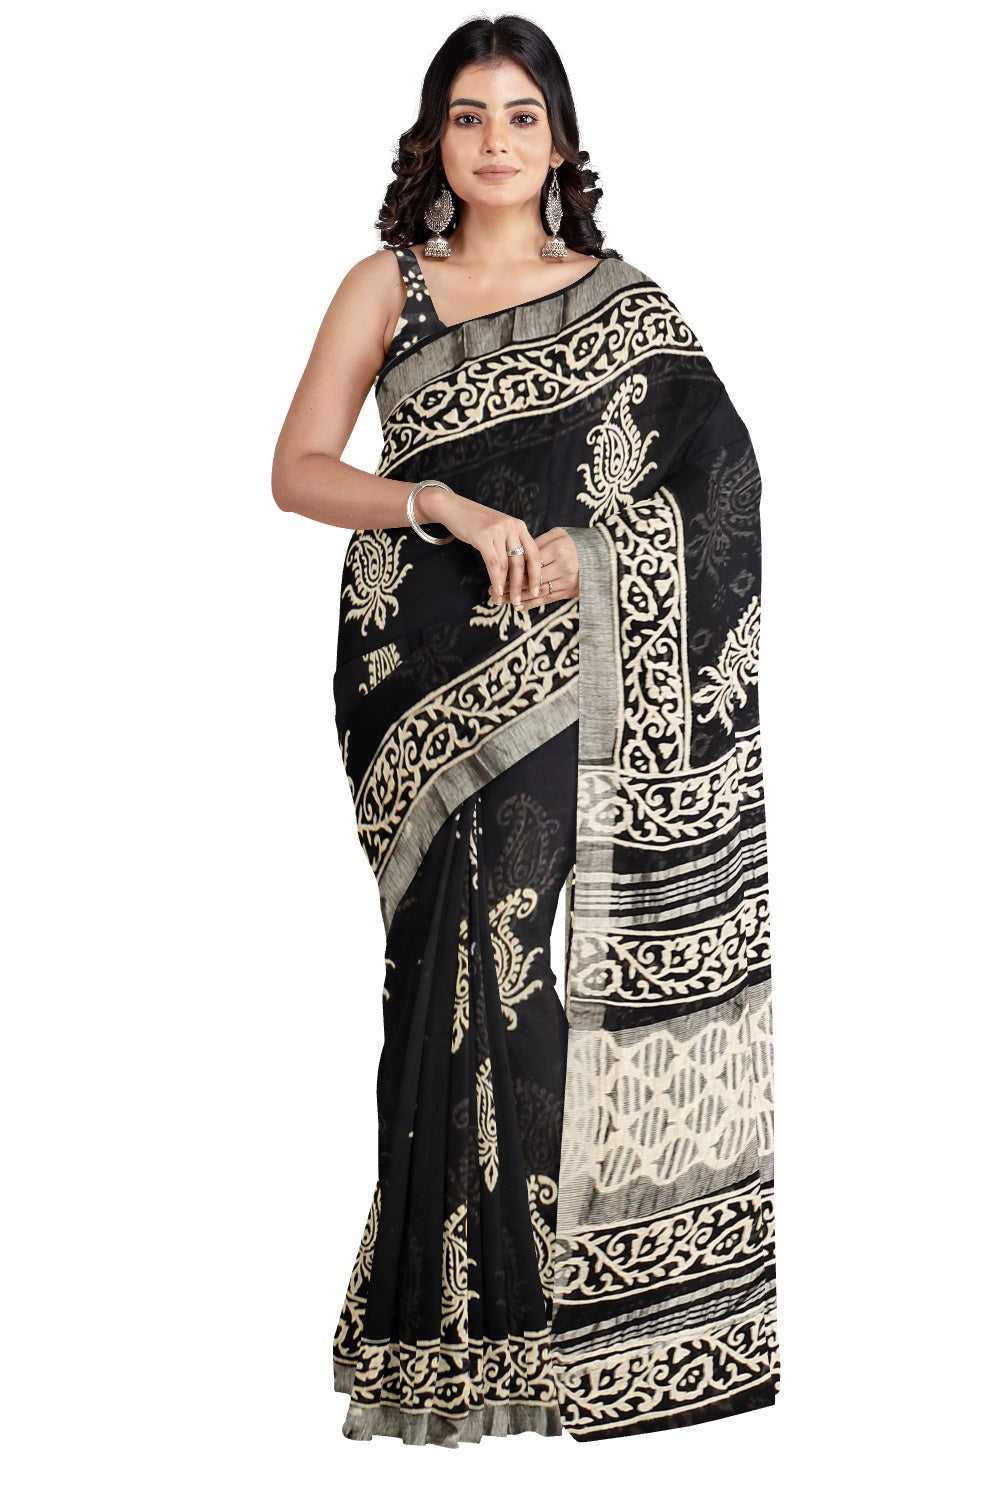 Southloom Linen Black and White Designer Saree